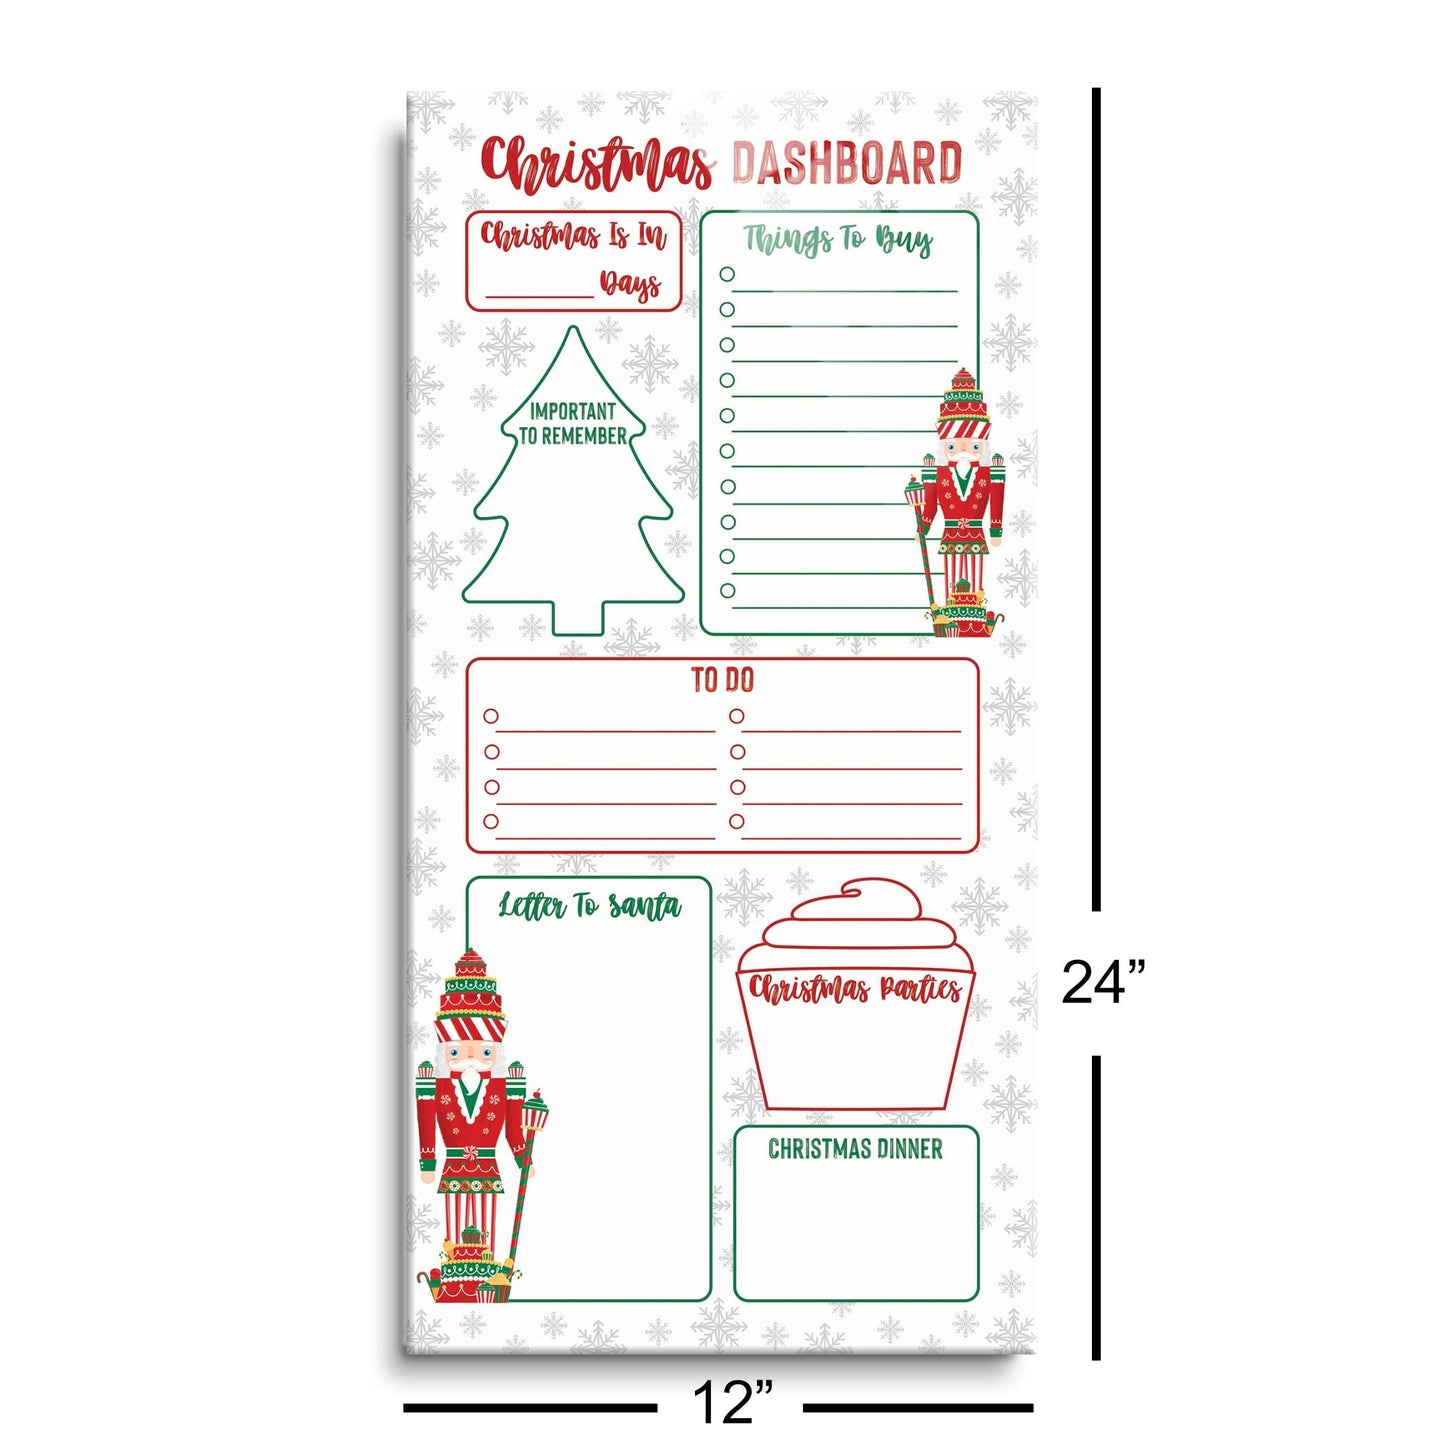 Classic Candyland Nutcracker Christmas Dashboard | 12x24